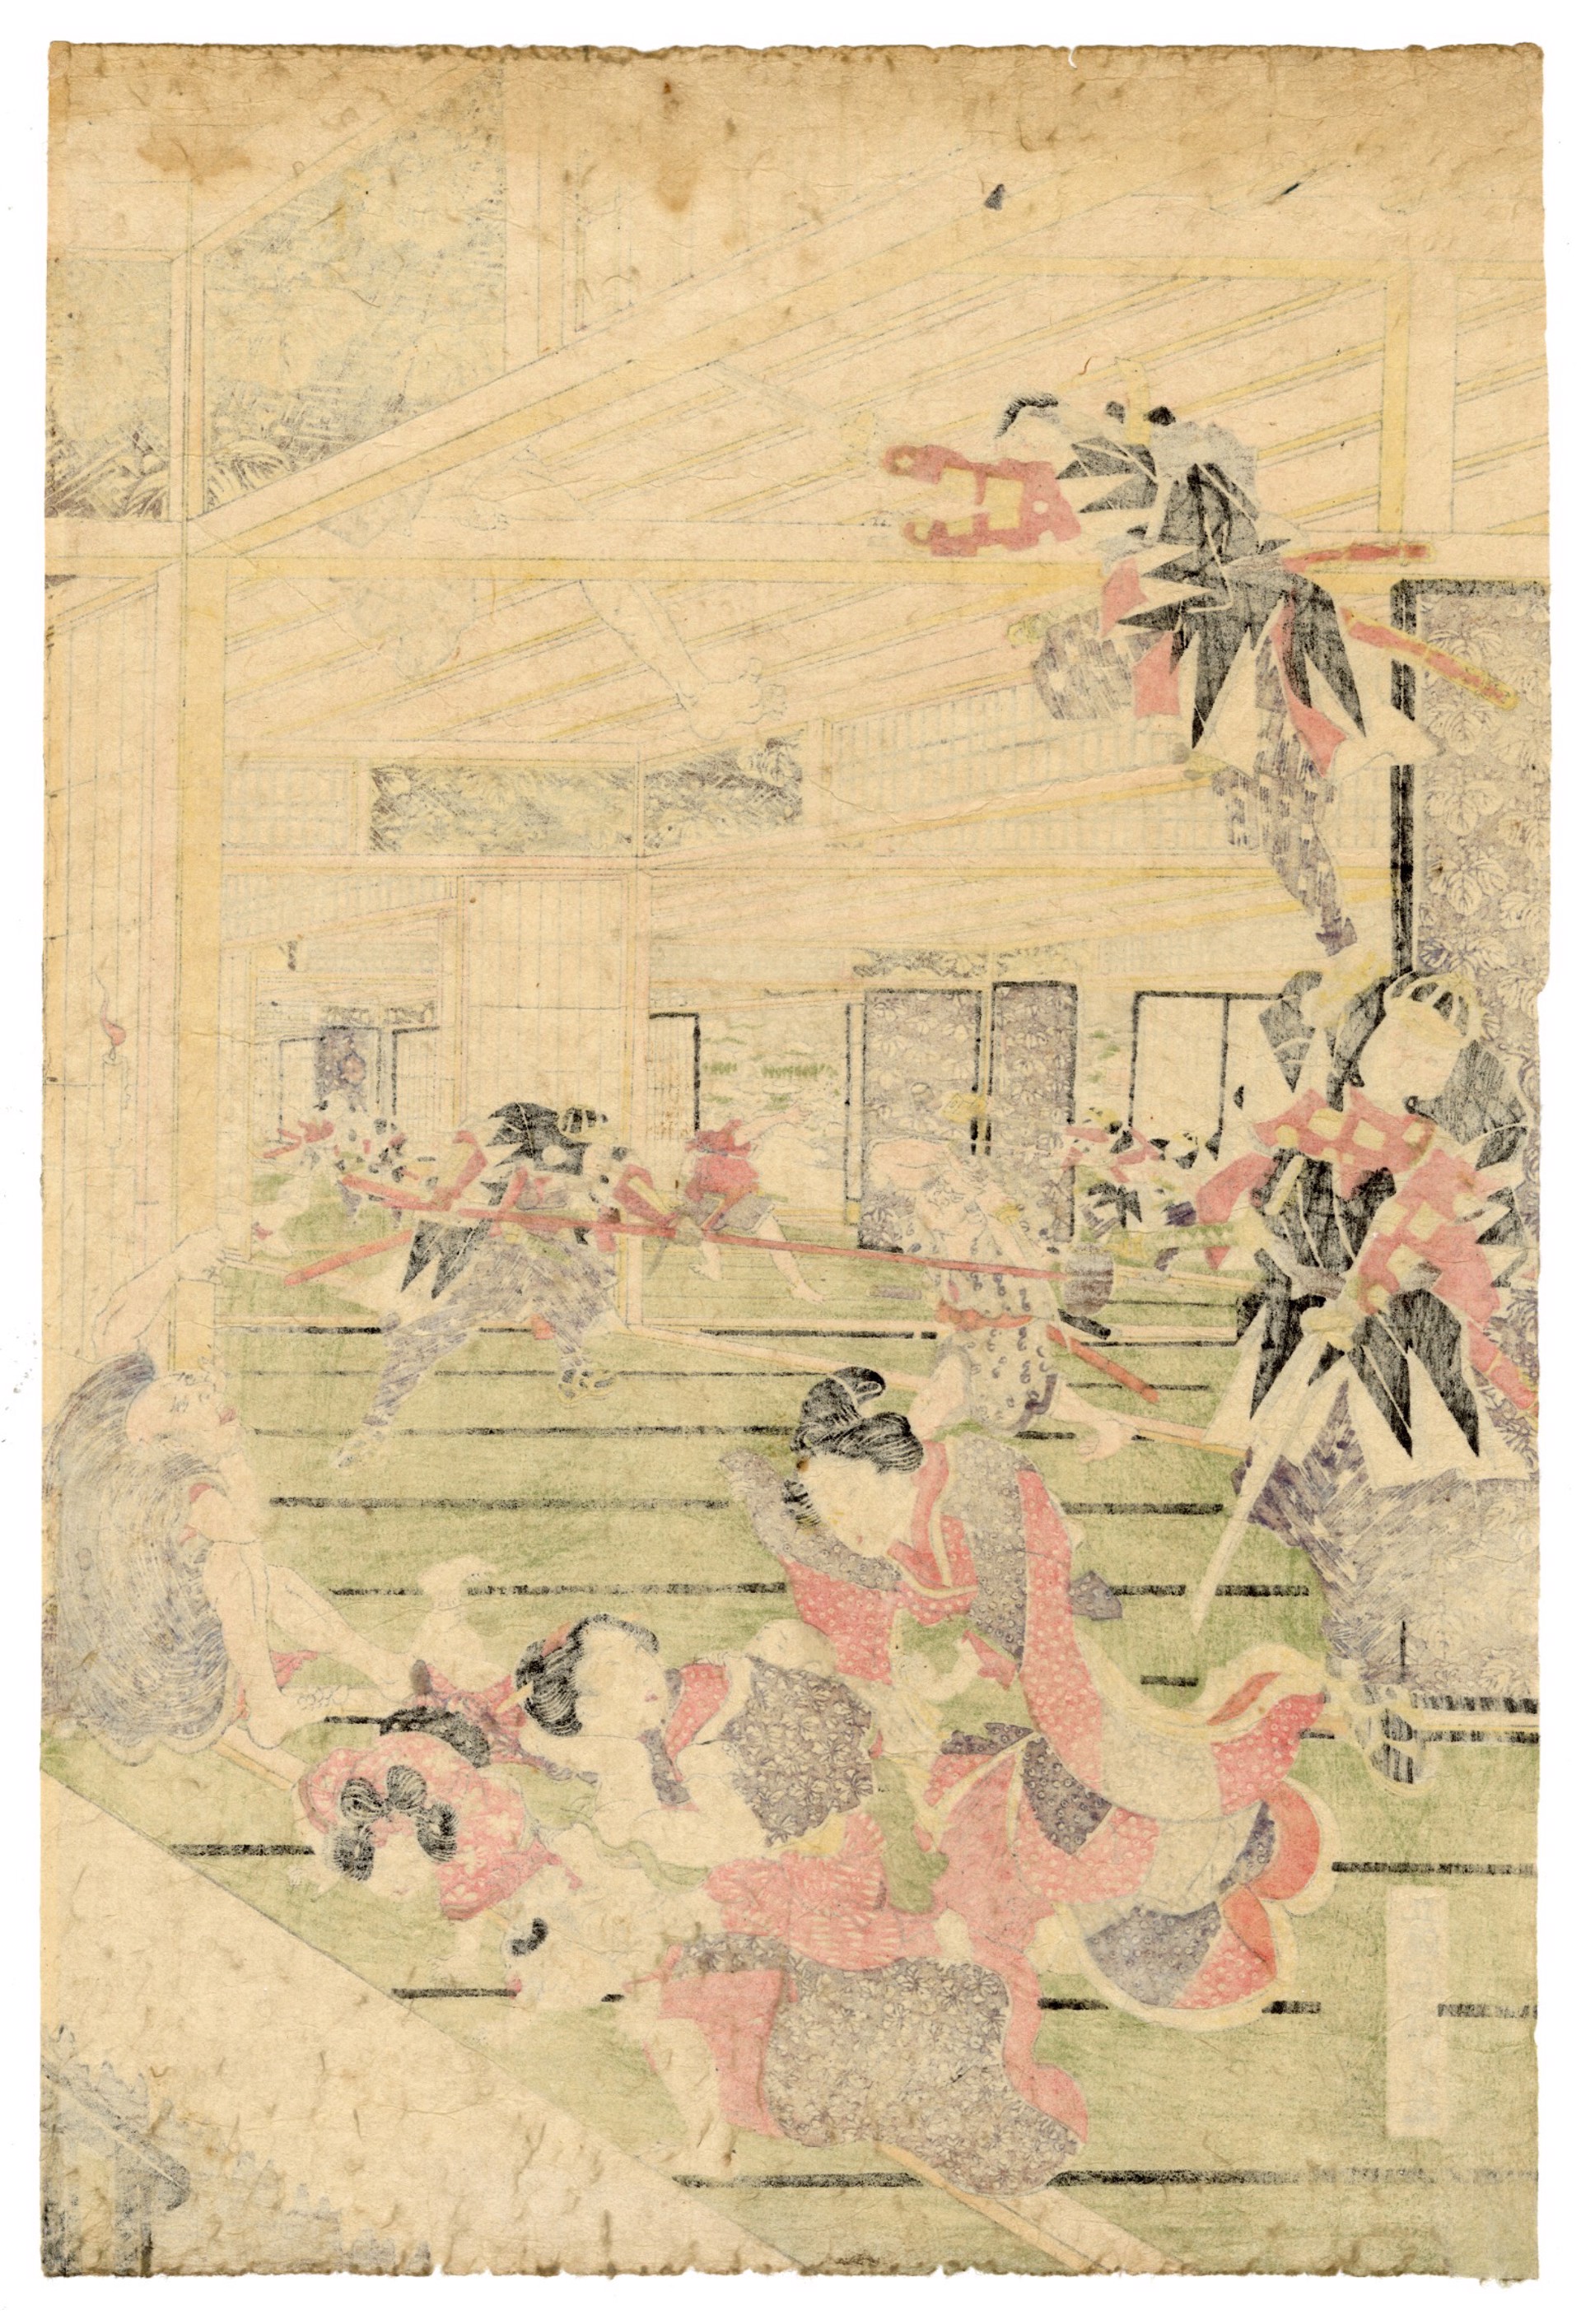 Chushingura - The Attack by Kunisada